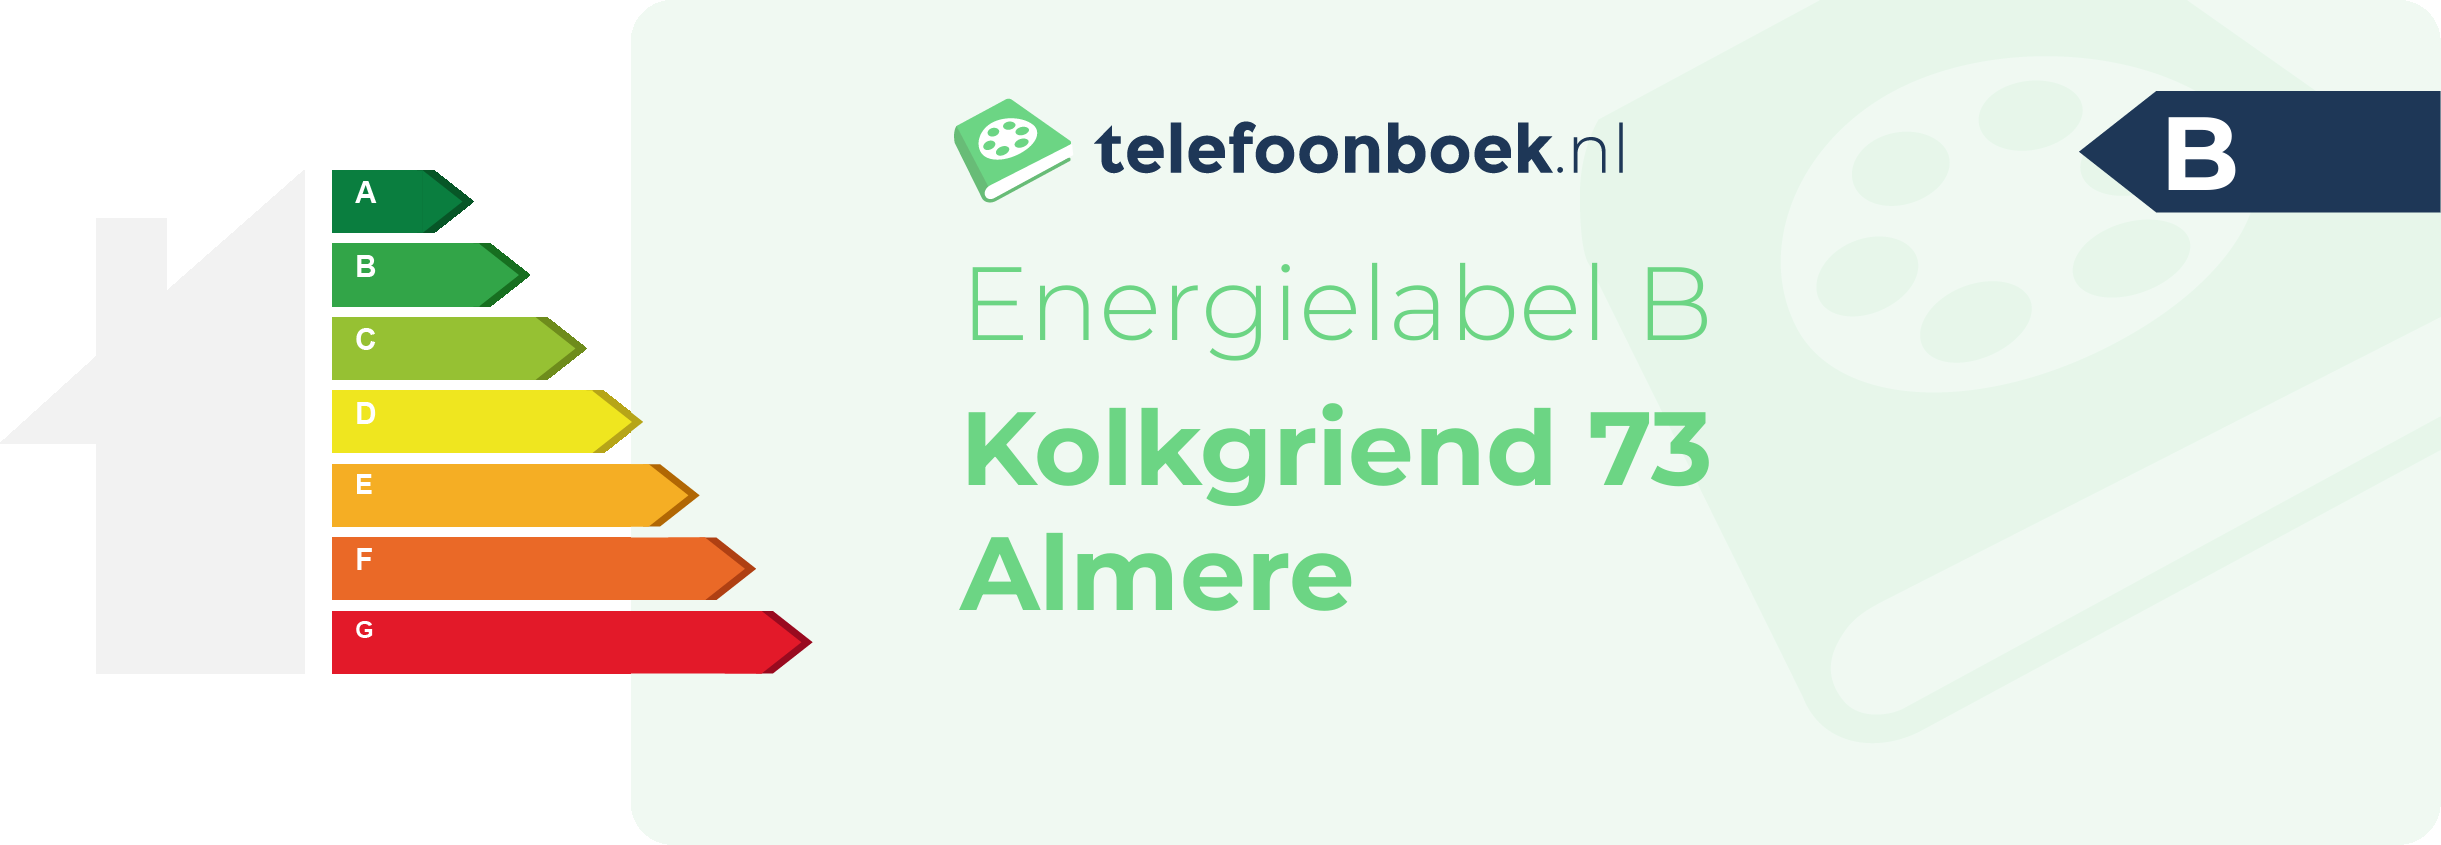 Energielabel Kolkgriend 73 Almere